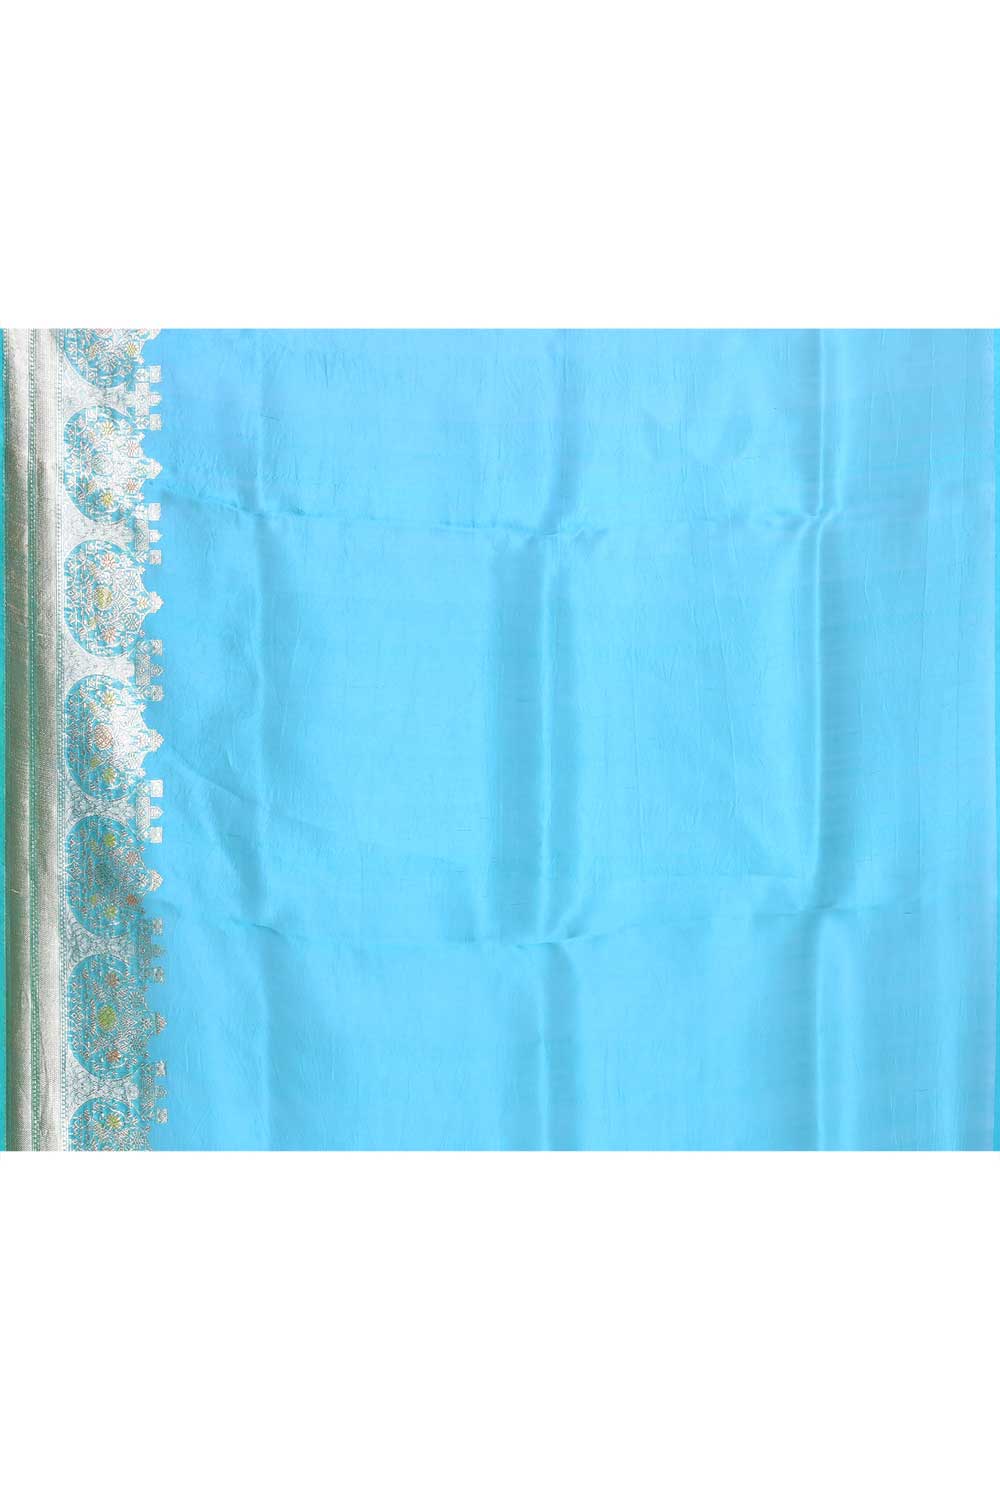 Rangkat Pure Kora Organza Banarasi Handloom Silk Saree With Modern Contemporary Body And Meenakari Border